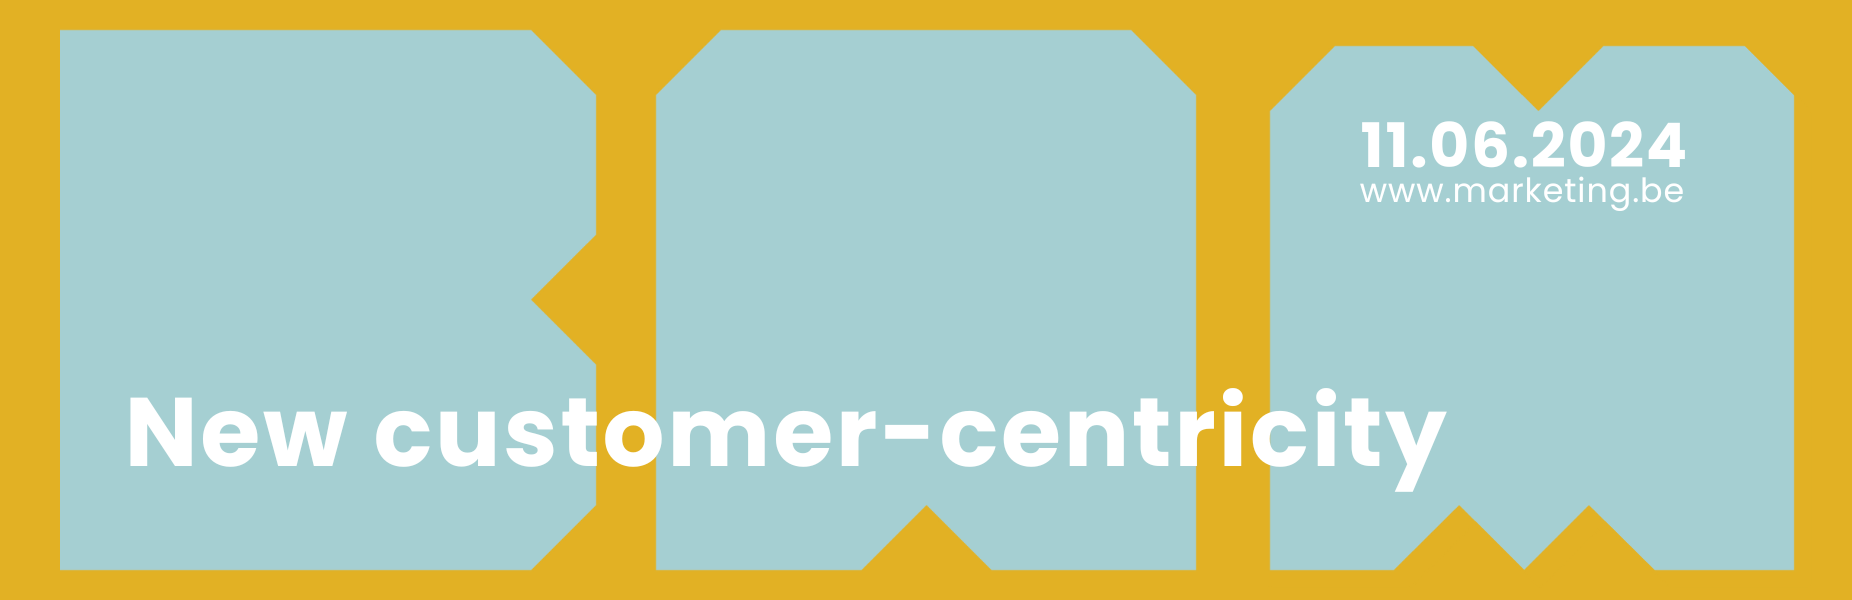 New customer centricity (3)